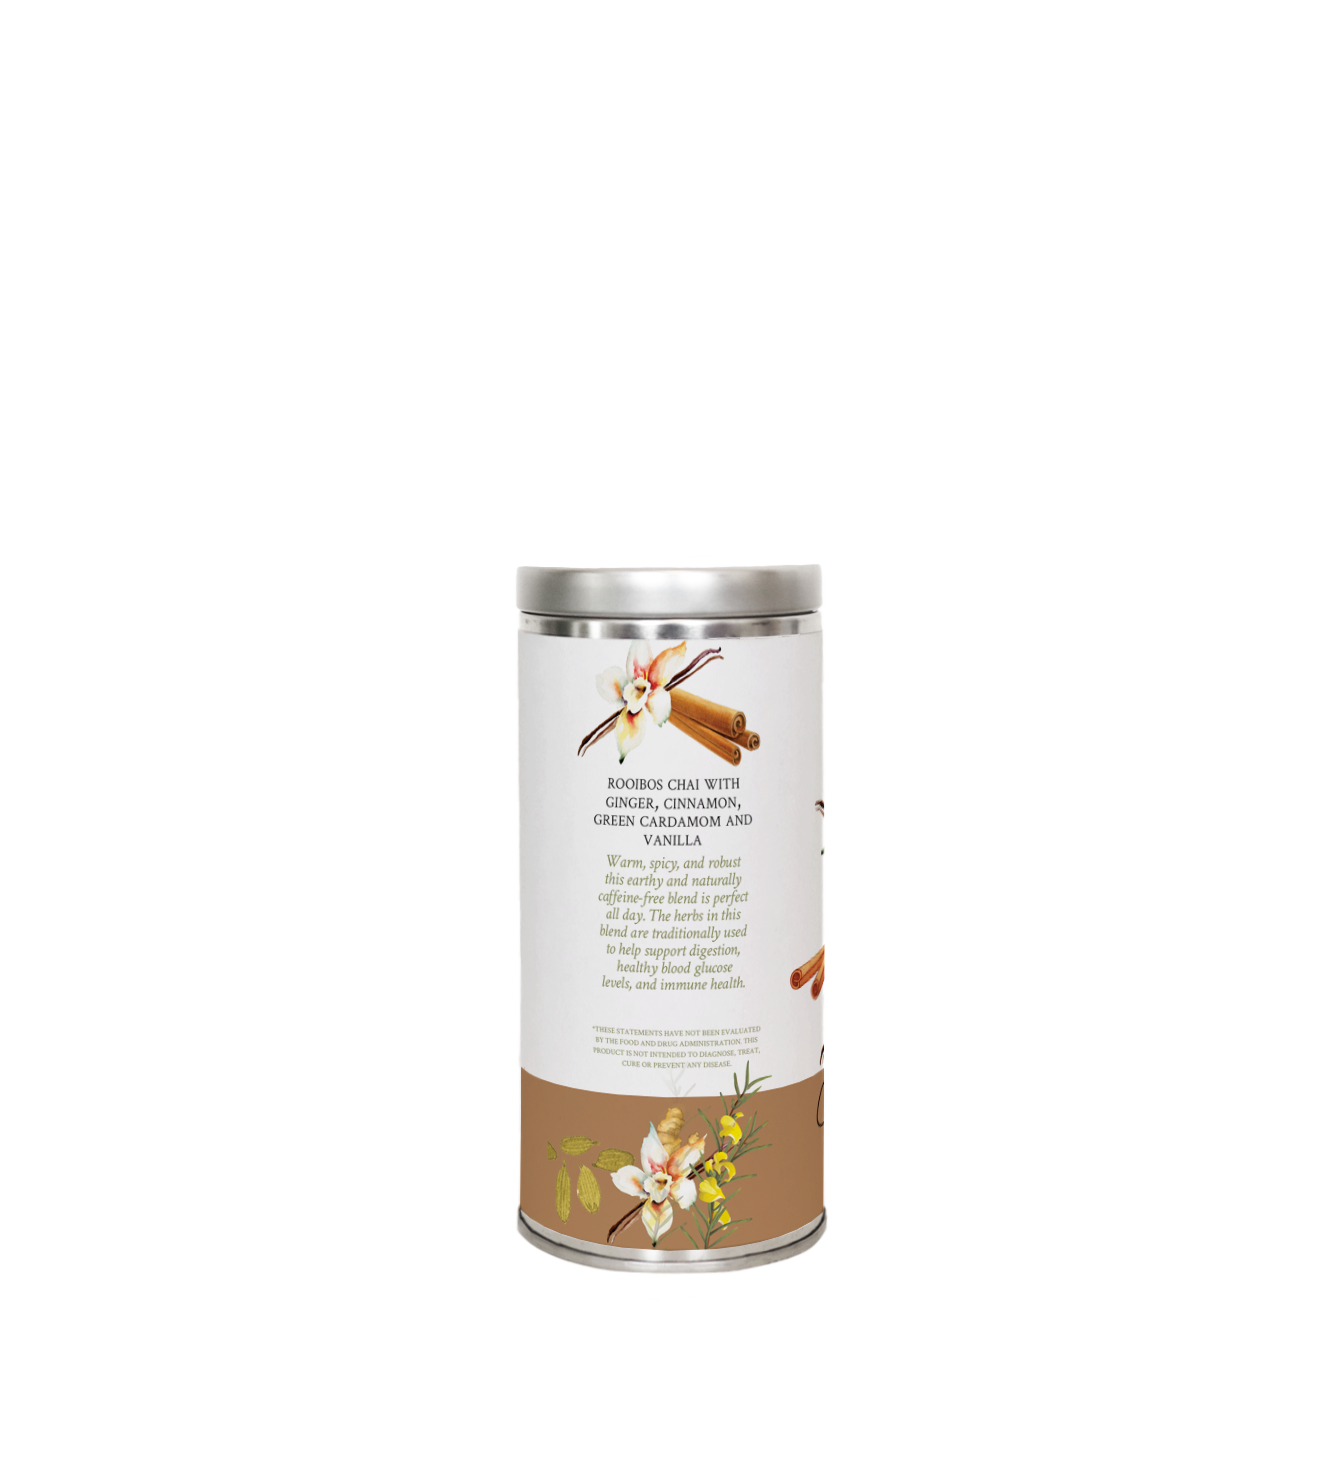 Chai Therapy - Organic Rooibos Chai Herbal Tea